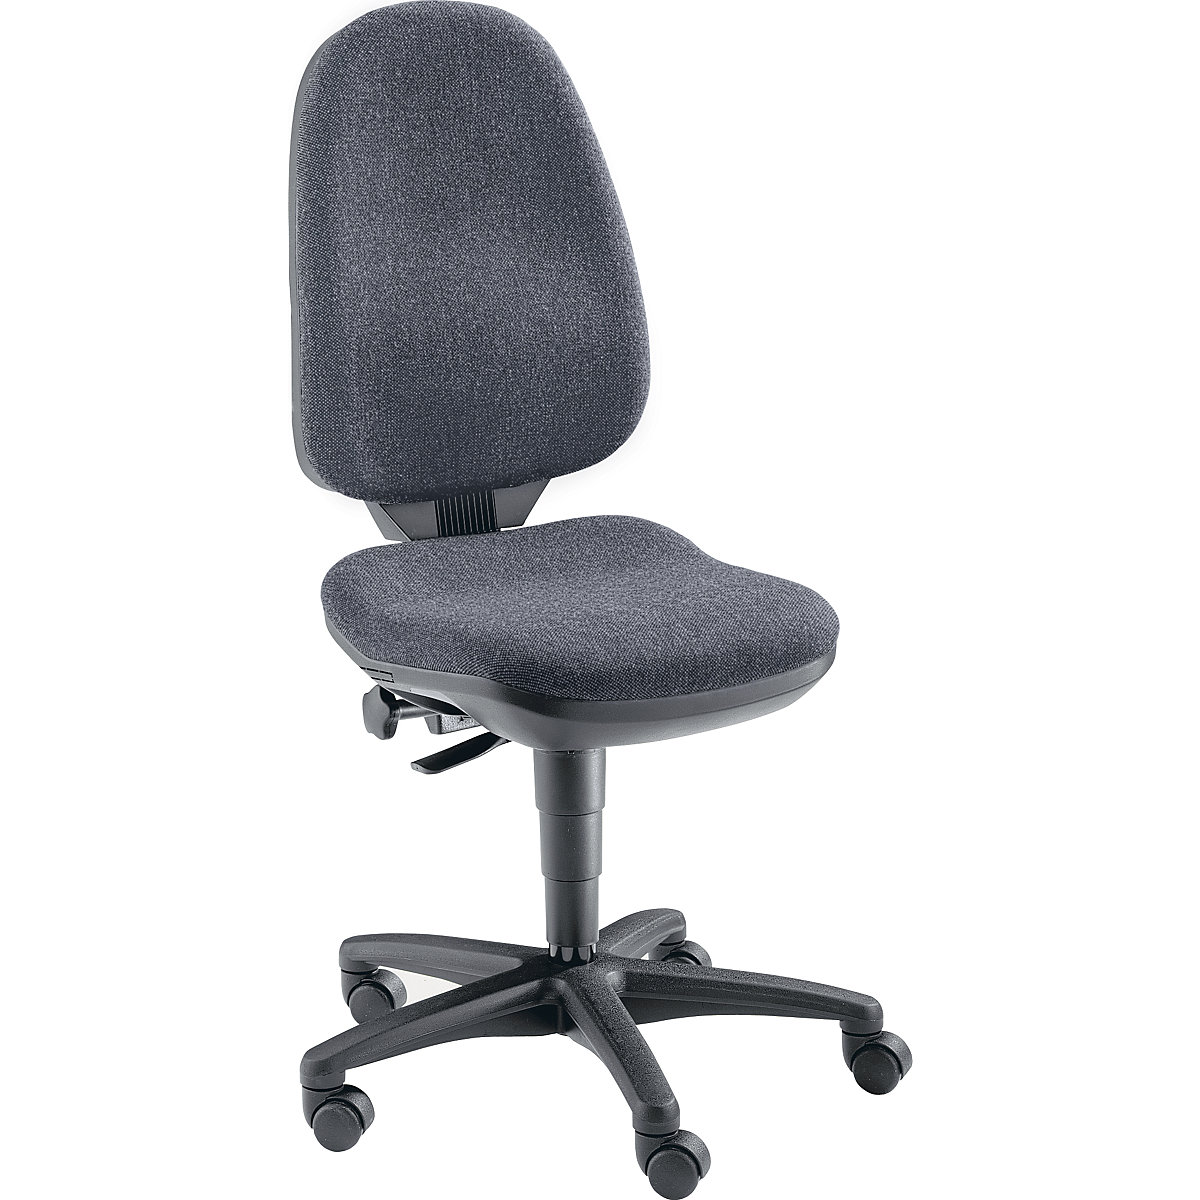 Ergonomic swivel chair - Topstar